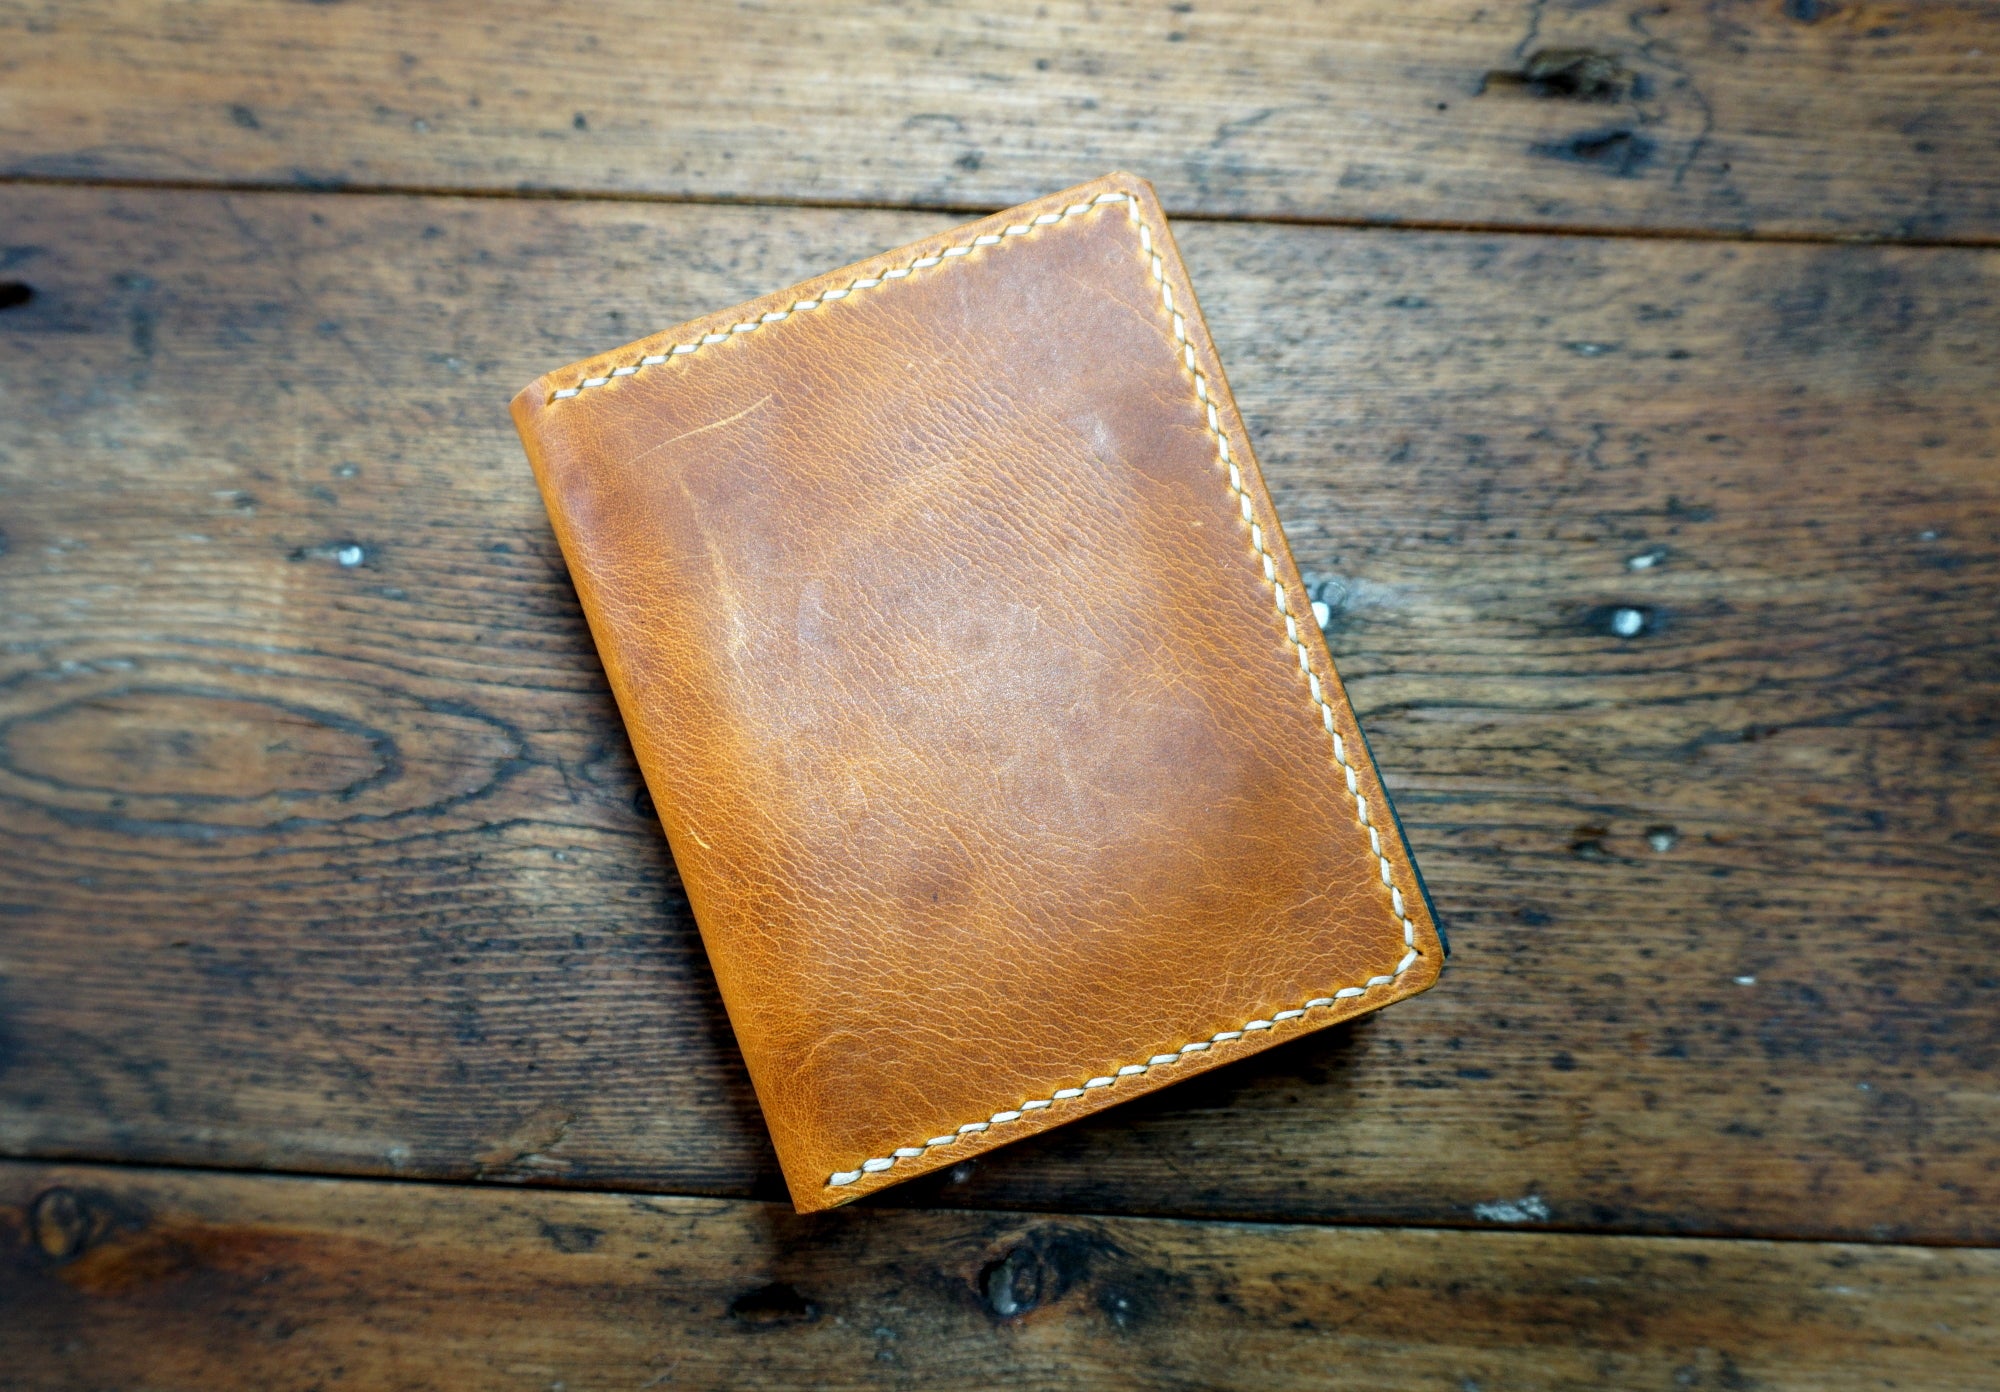 The Kimbolton Wallet in Waxy Italian Leather